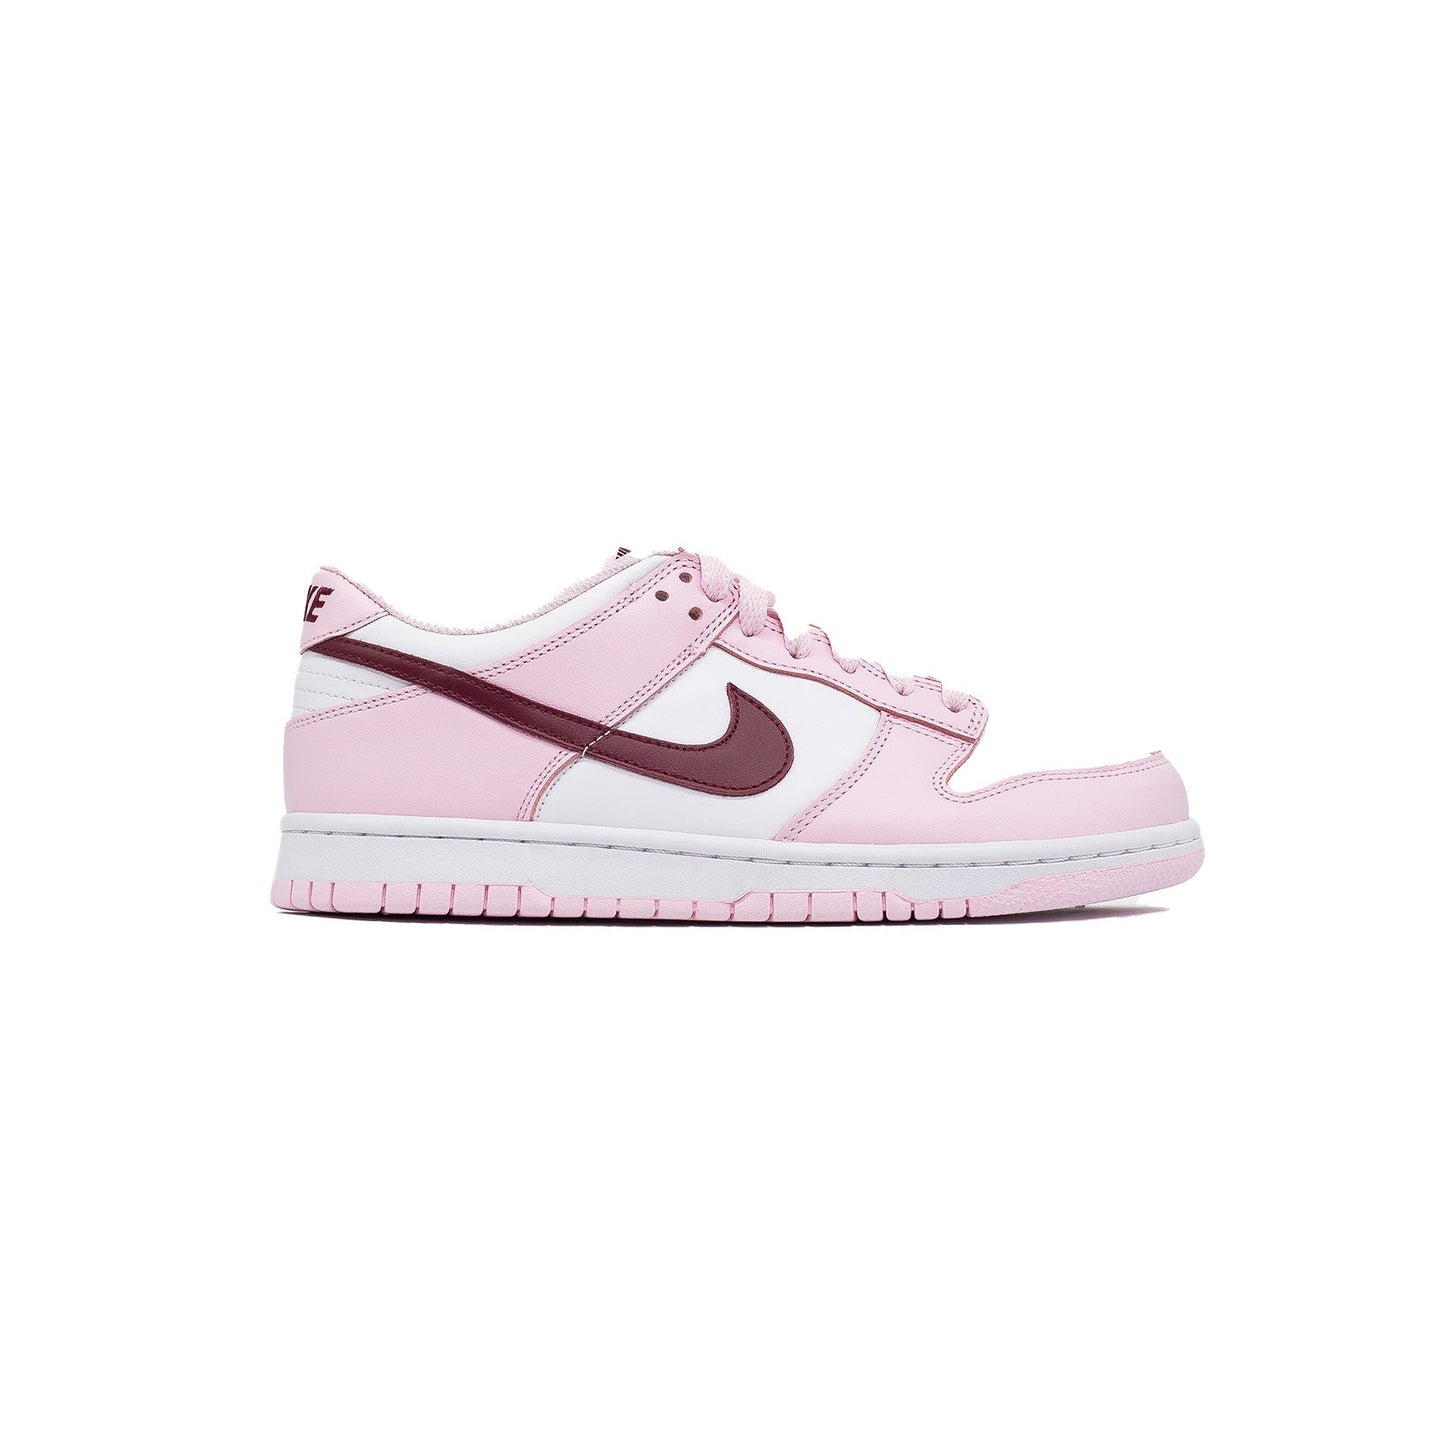 NikeDunkLow GS PinkFoam 1445x